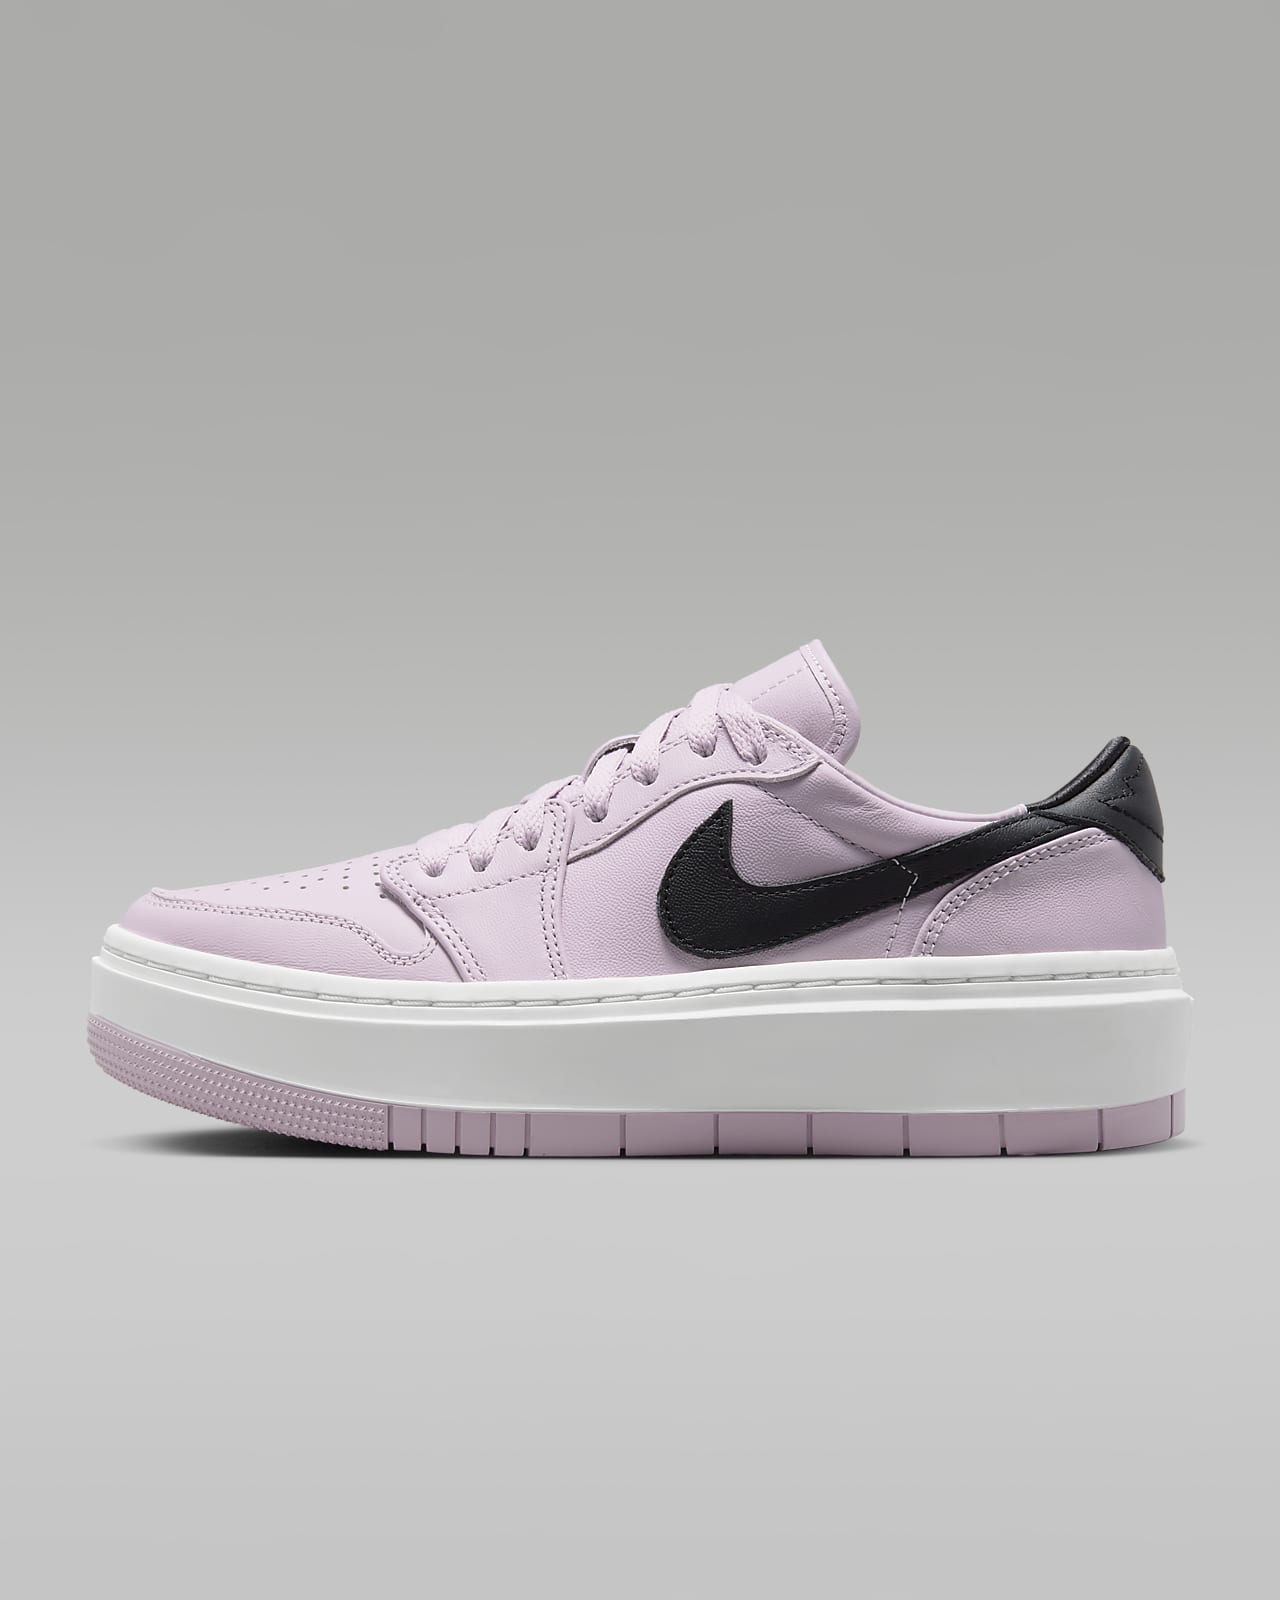 Nike Jordan 1 Air Elevate Low sneakers in gray and white - GRAY